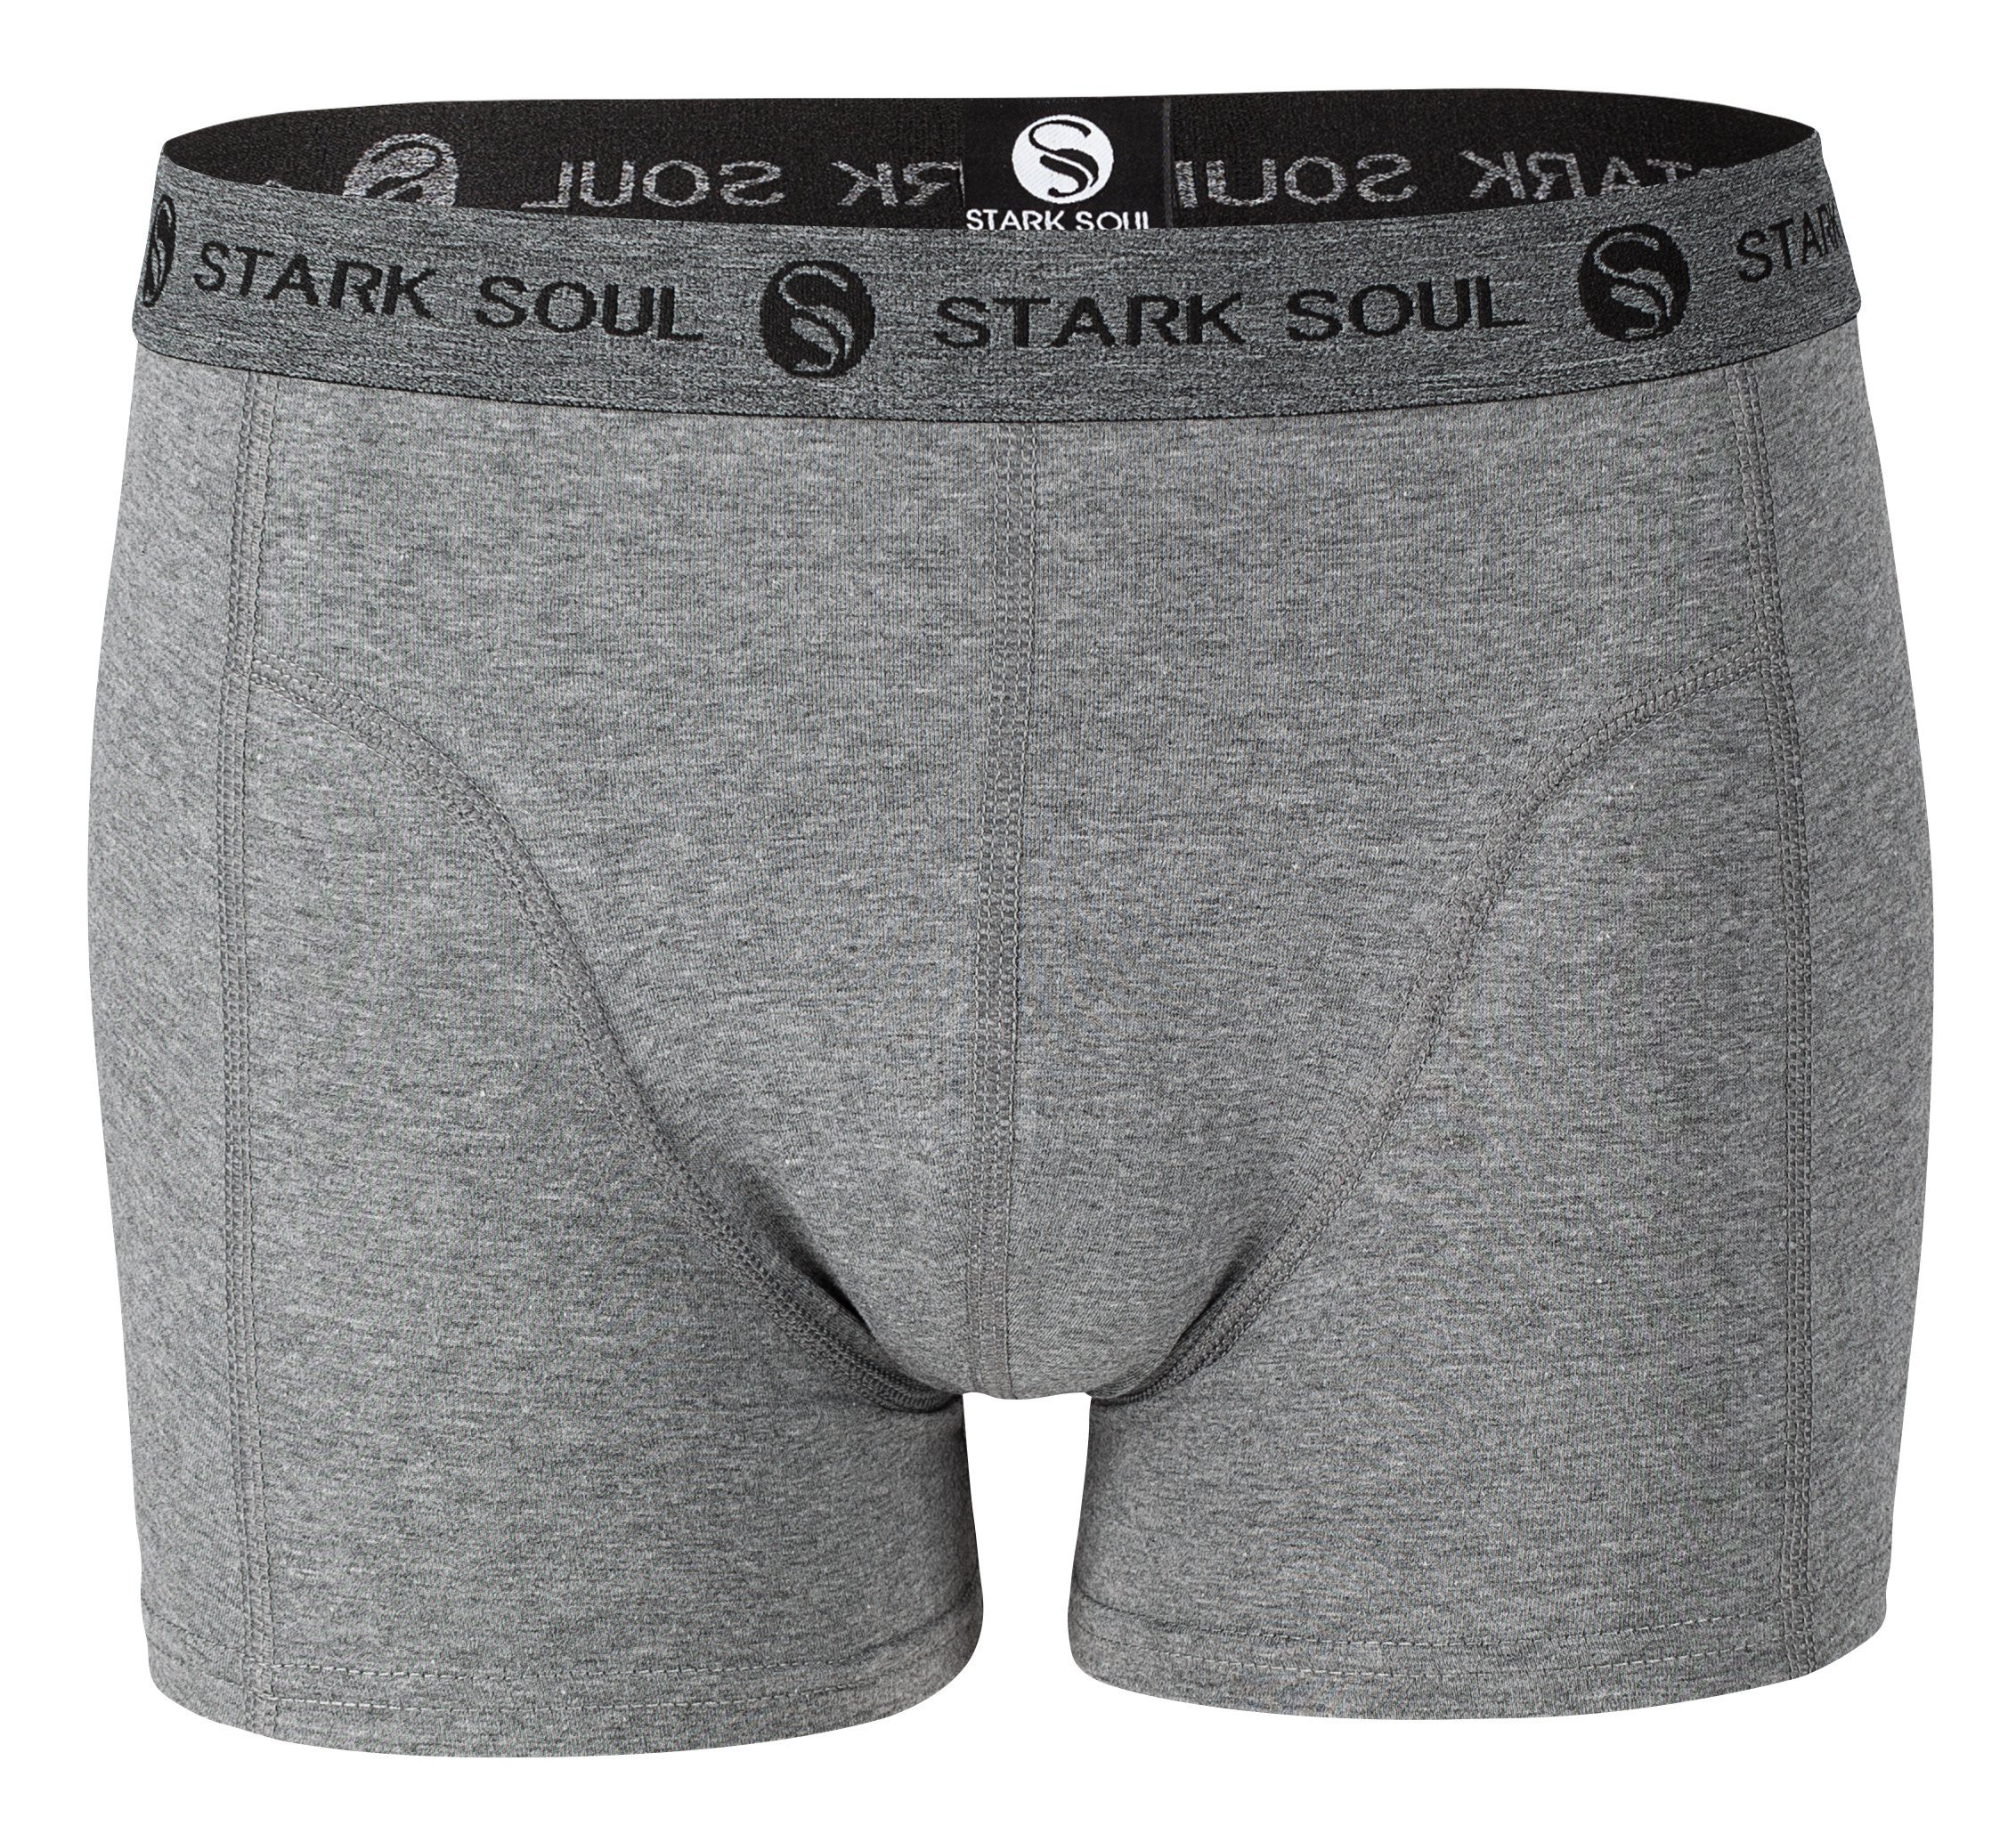 Stark Soul® Pack, 3er - Baumwolle Boxershorts, Trunks Herren Boxershorts 3er-Pack Retroshorts, weiche Grau-Melange